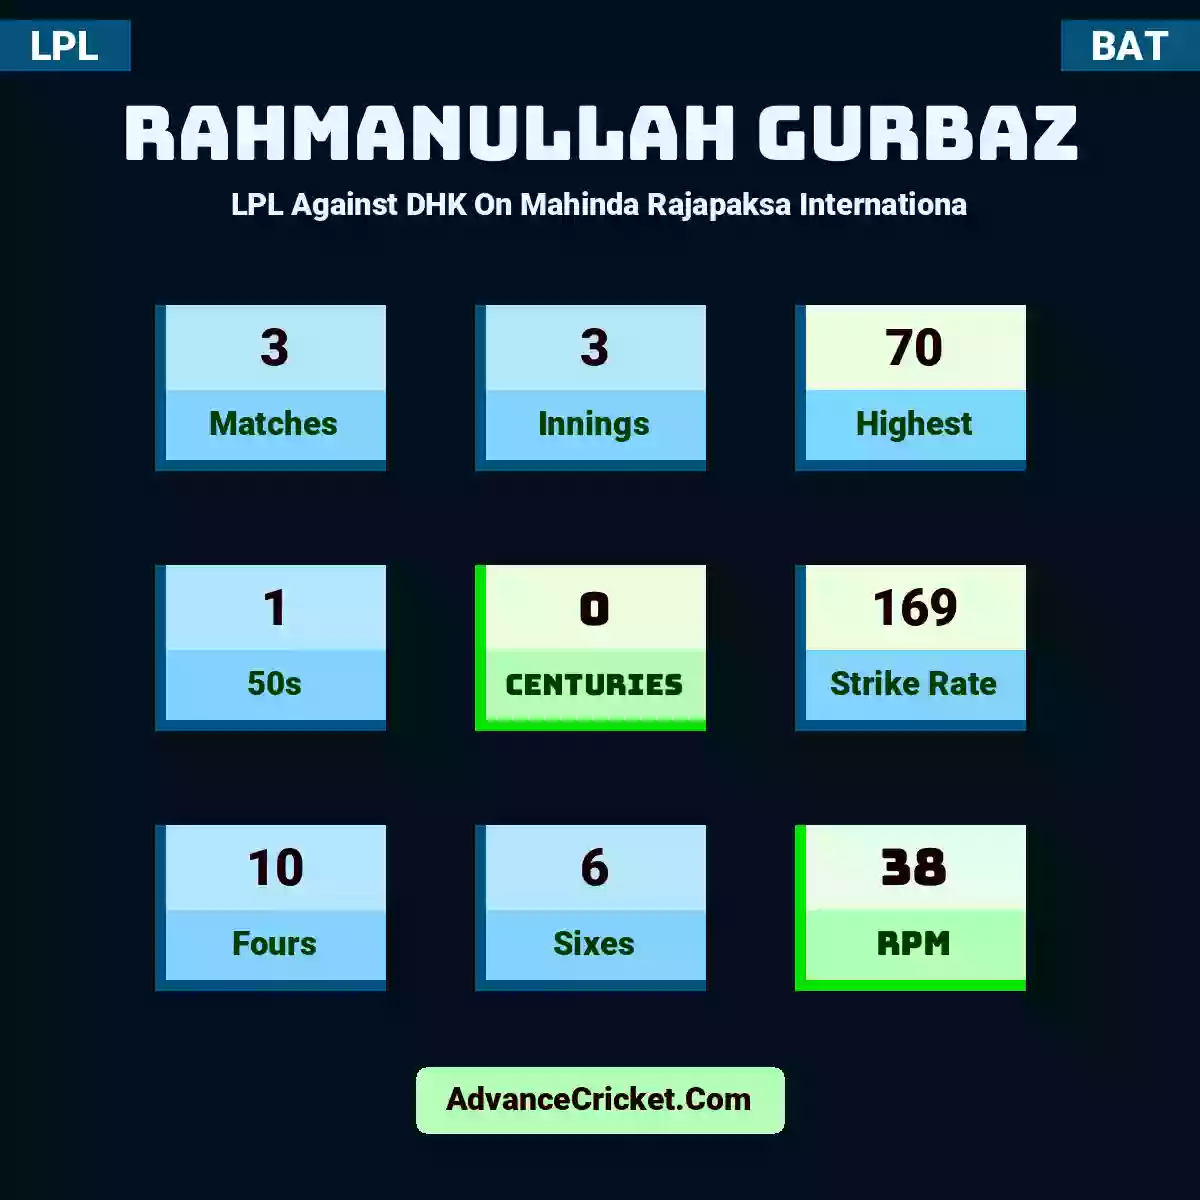 Rahmanullah Gurbaz LPL  Against DHK On Mahinda Rajapaksa Internationa, Rahmanullah Gurbaz played 3 matches, scored 70 runs as highest, 1 half-centuries, and 0 centuries, with a strike rate of 169. R.Gurbaz hit 10 fours and 6 sixes, with an RPM of 38.